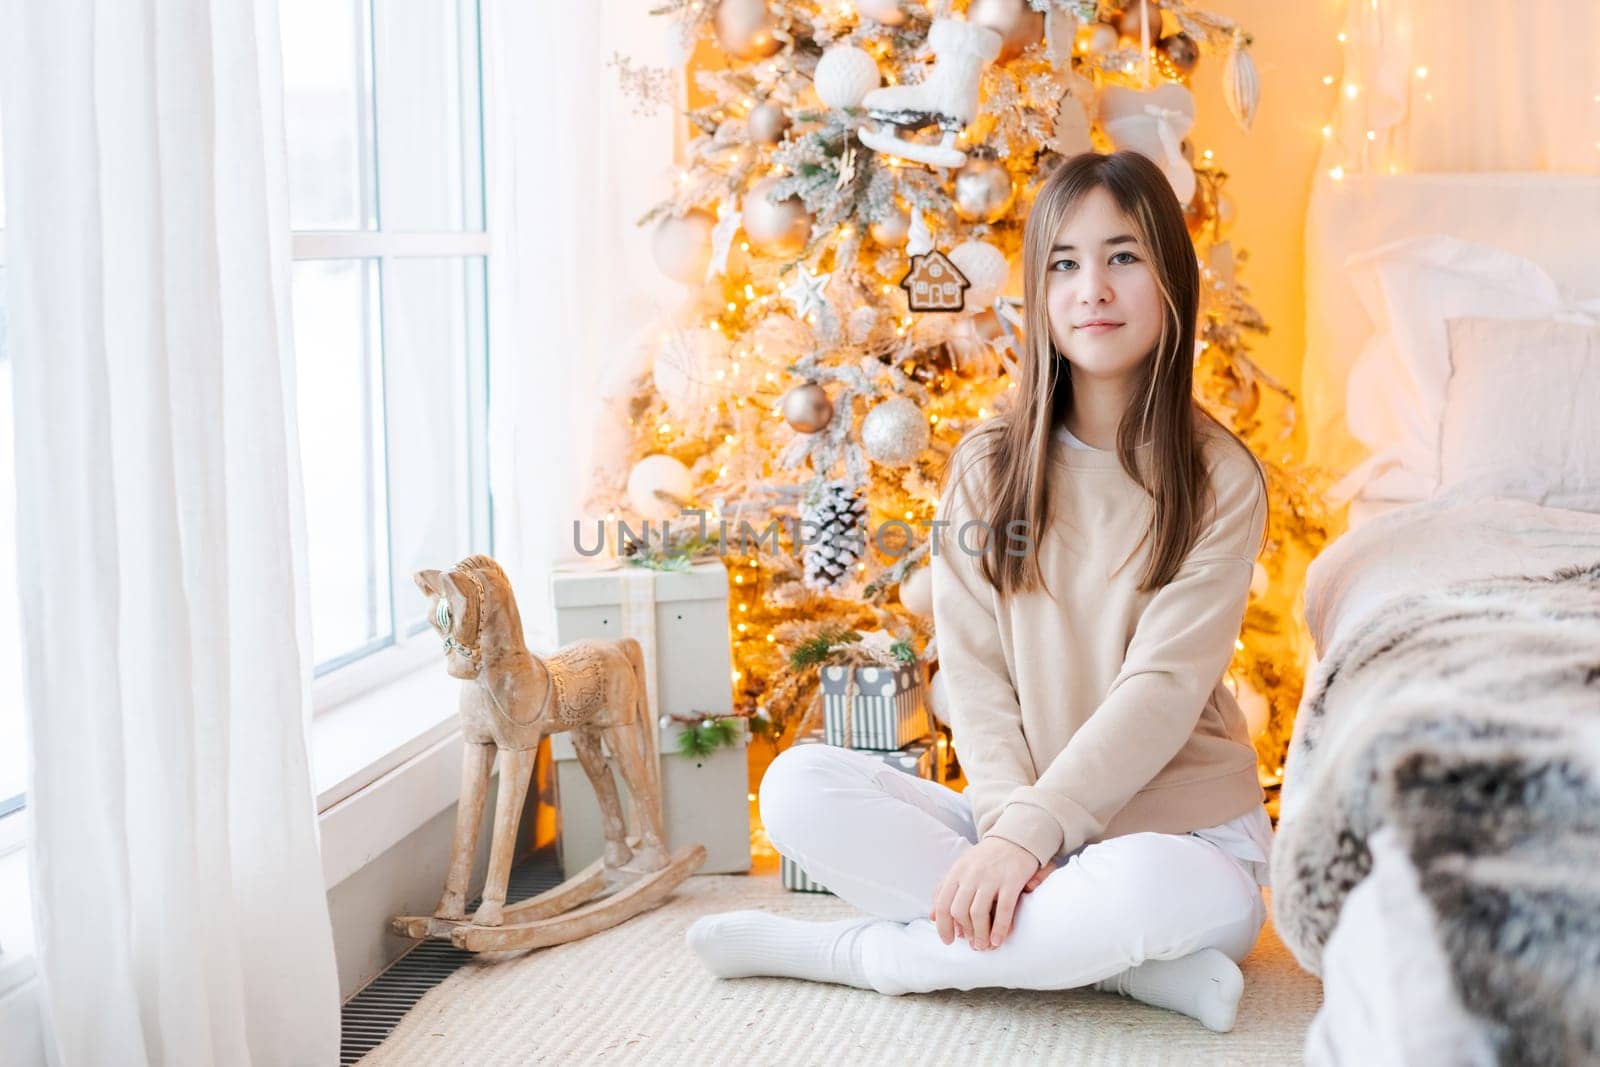 Cute girl sits on floor by window with Christmas tree in background in her by EkaterinaPereslavtseva